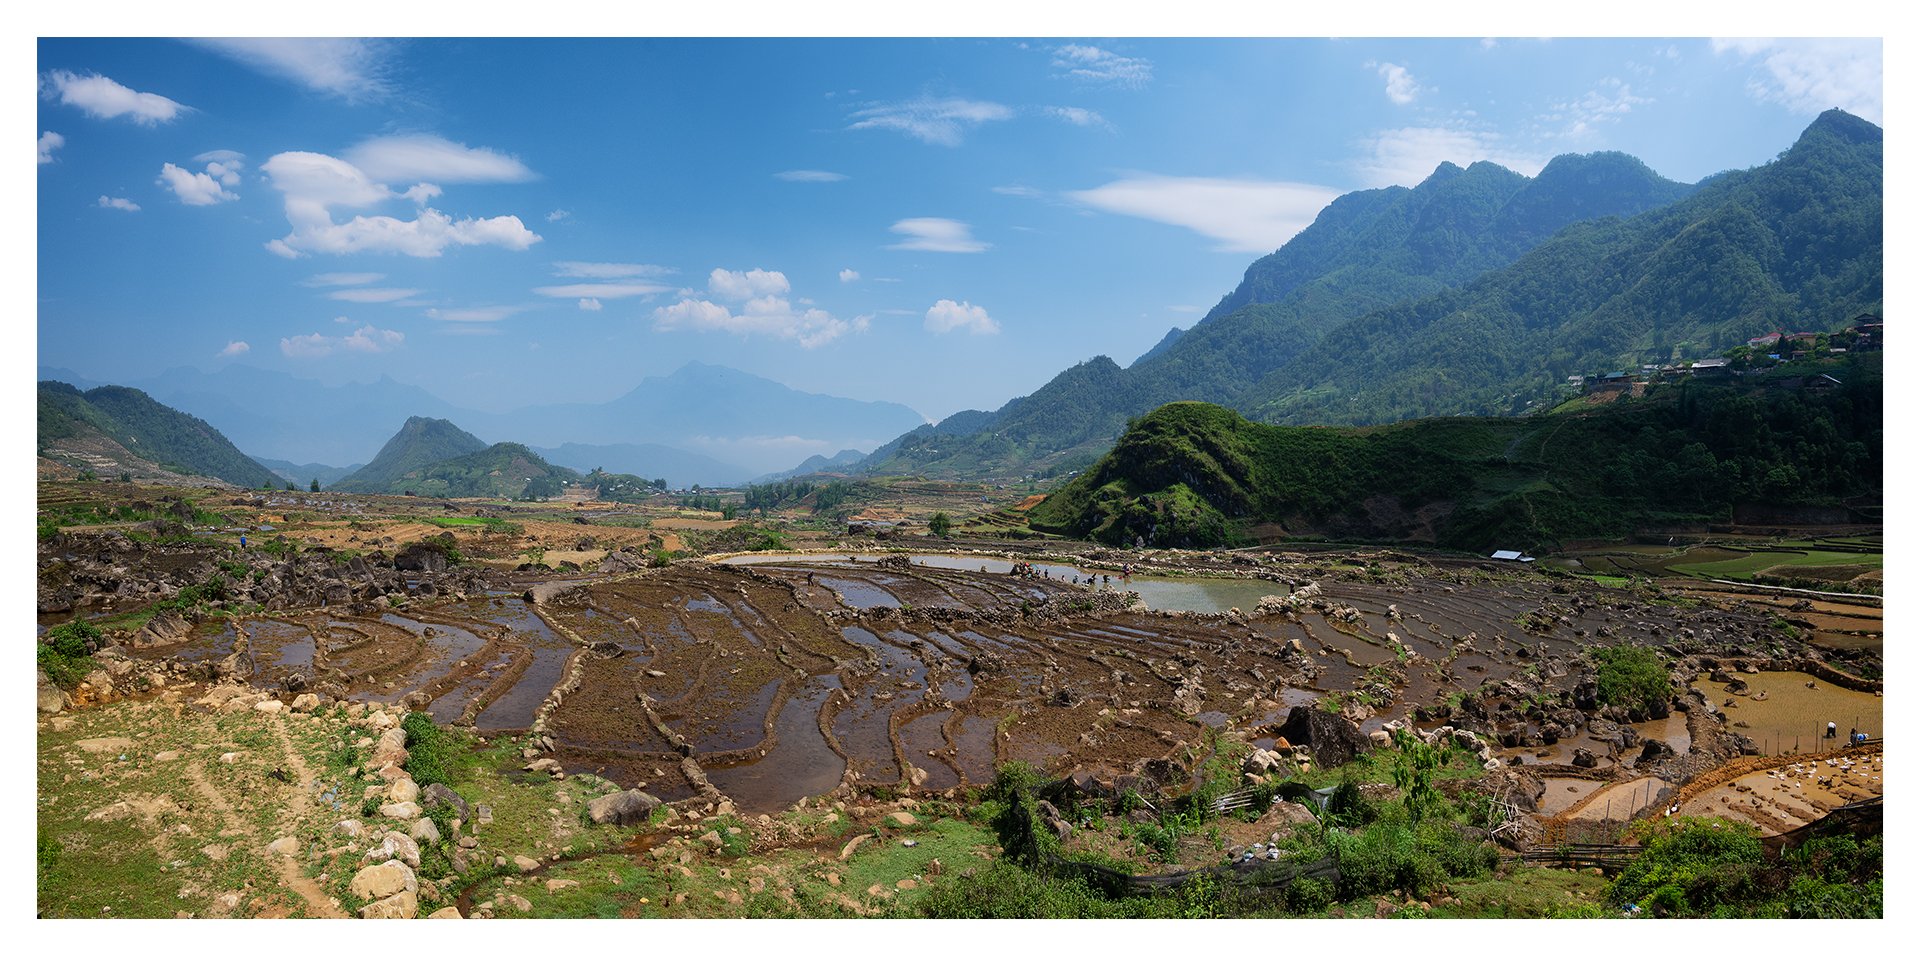 A valley near the China-Vietnam border